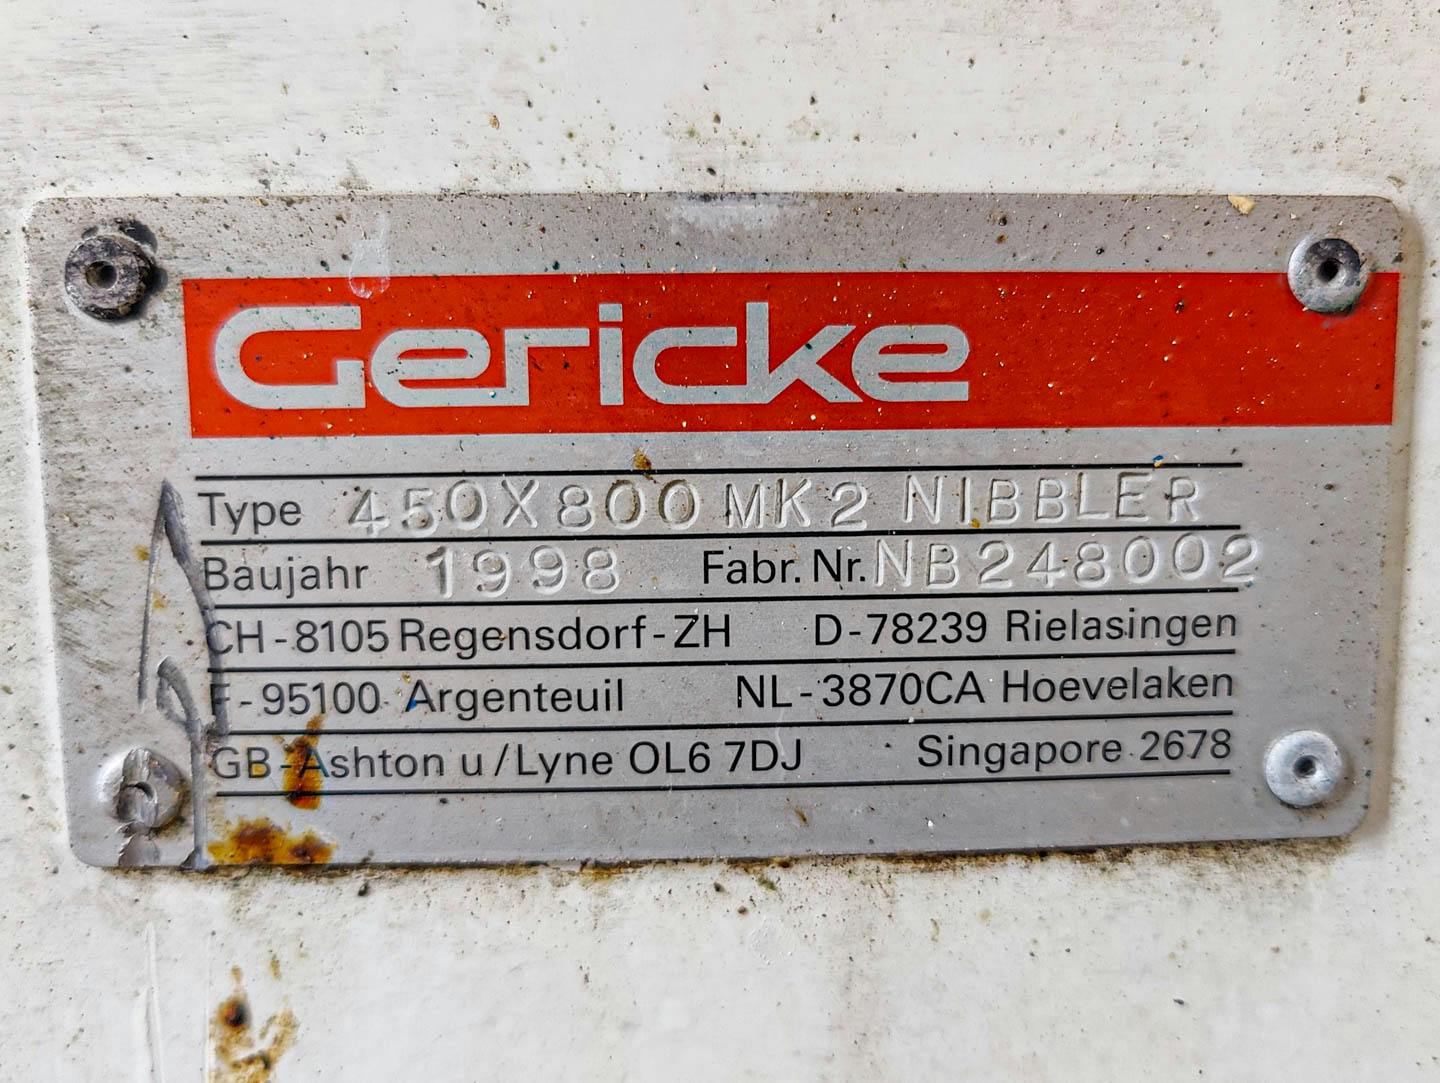 Gericke 450x800 MK2 NIBBLER - Granulador de tamiz - image 11